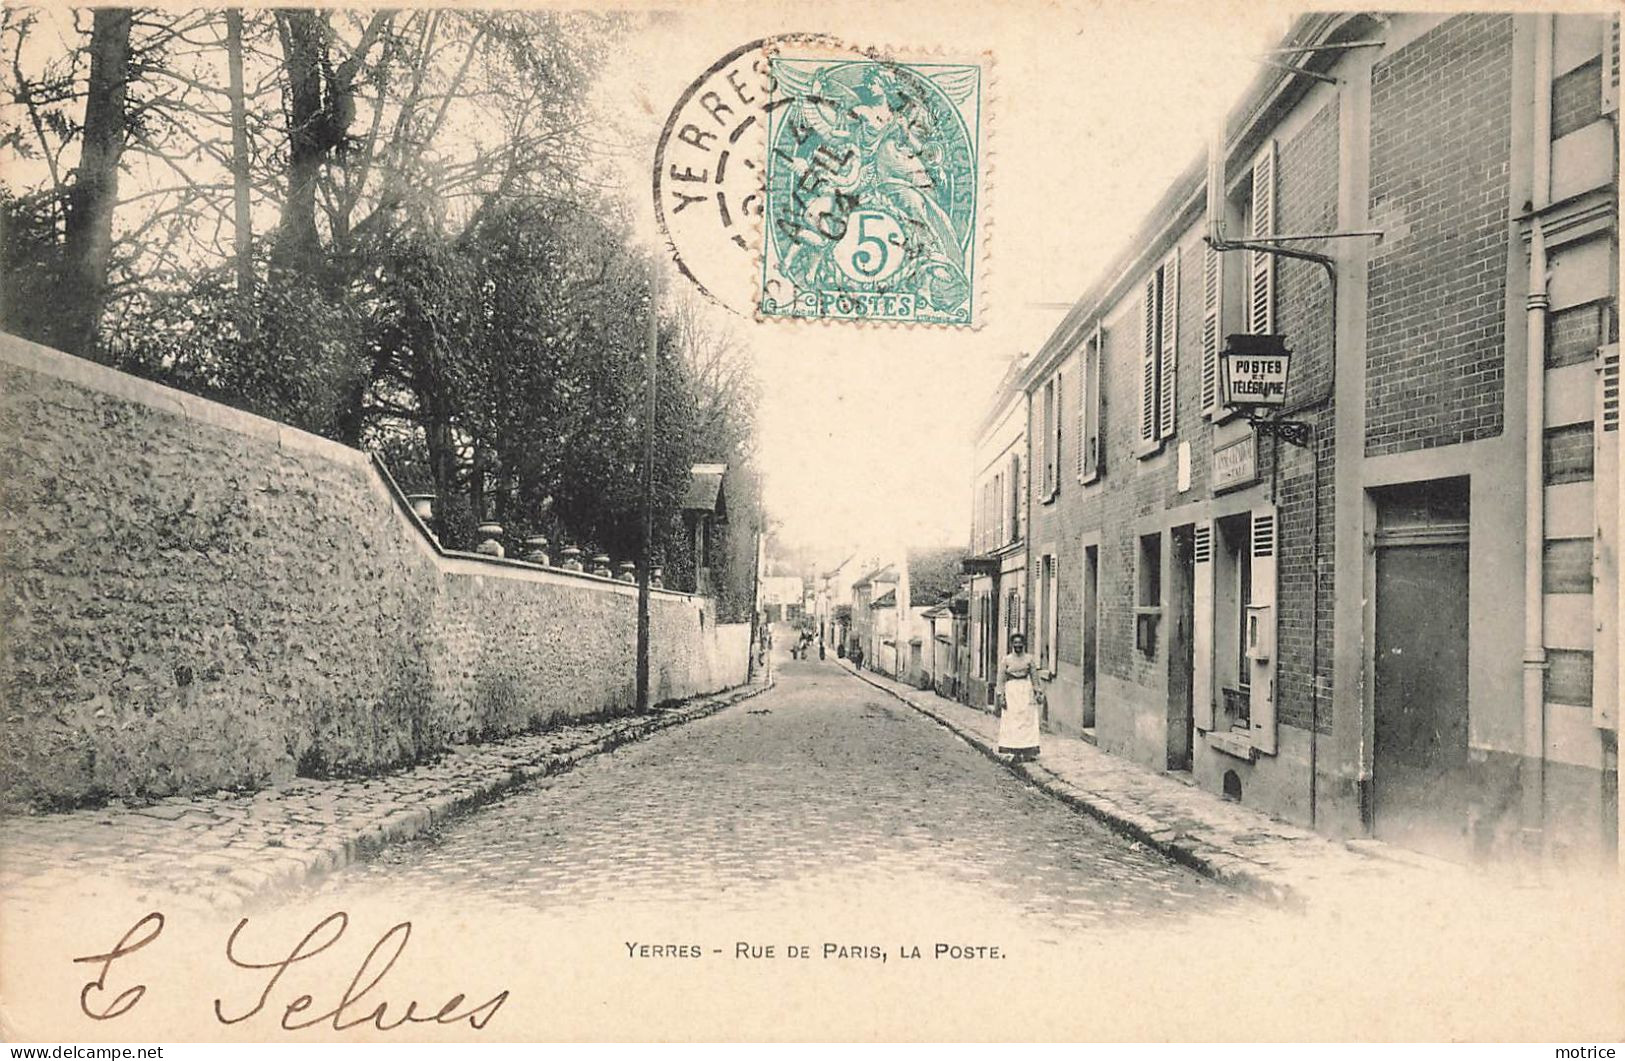 YERRES - Rue De Paris, La Poste. - Postal Services